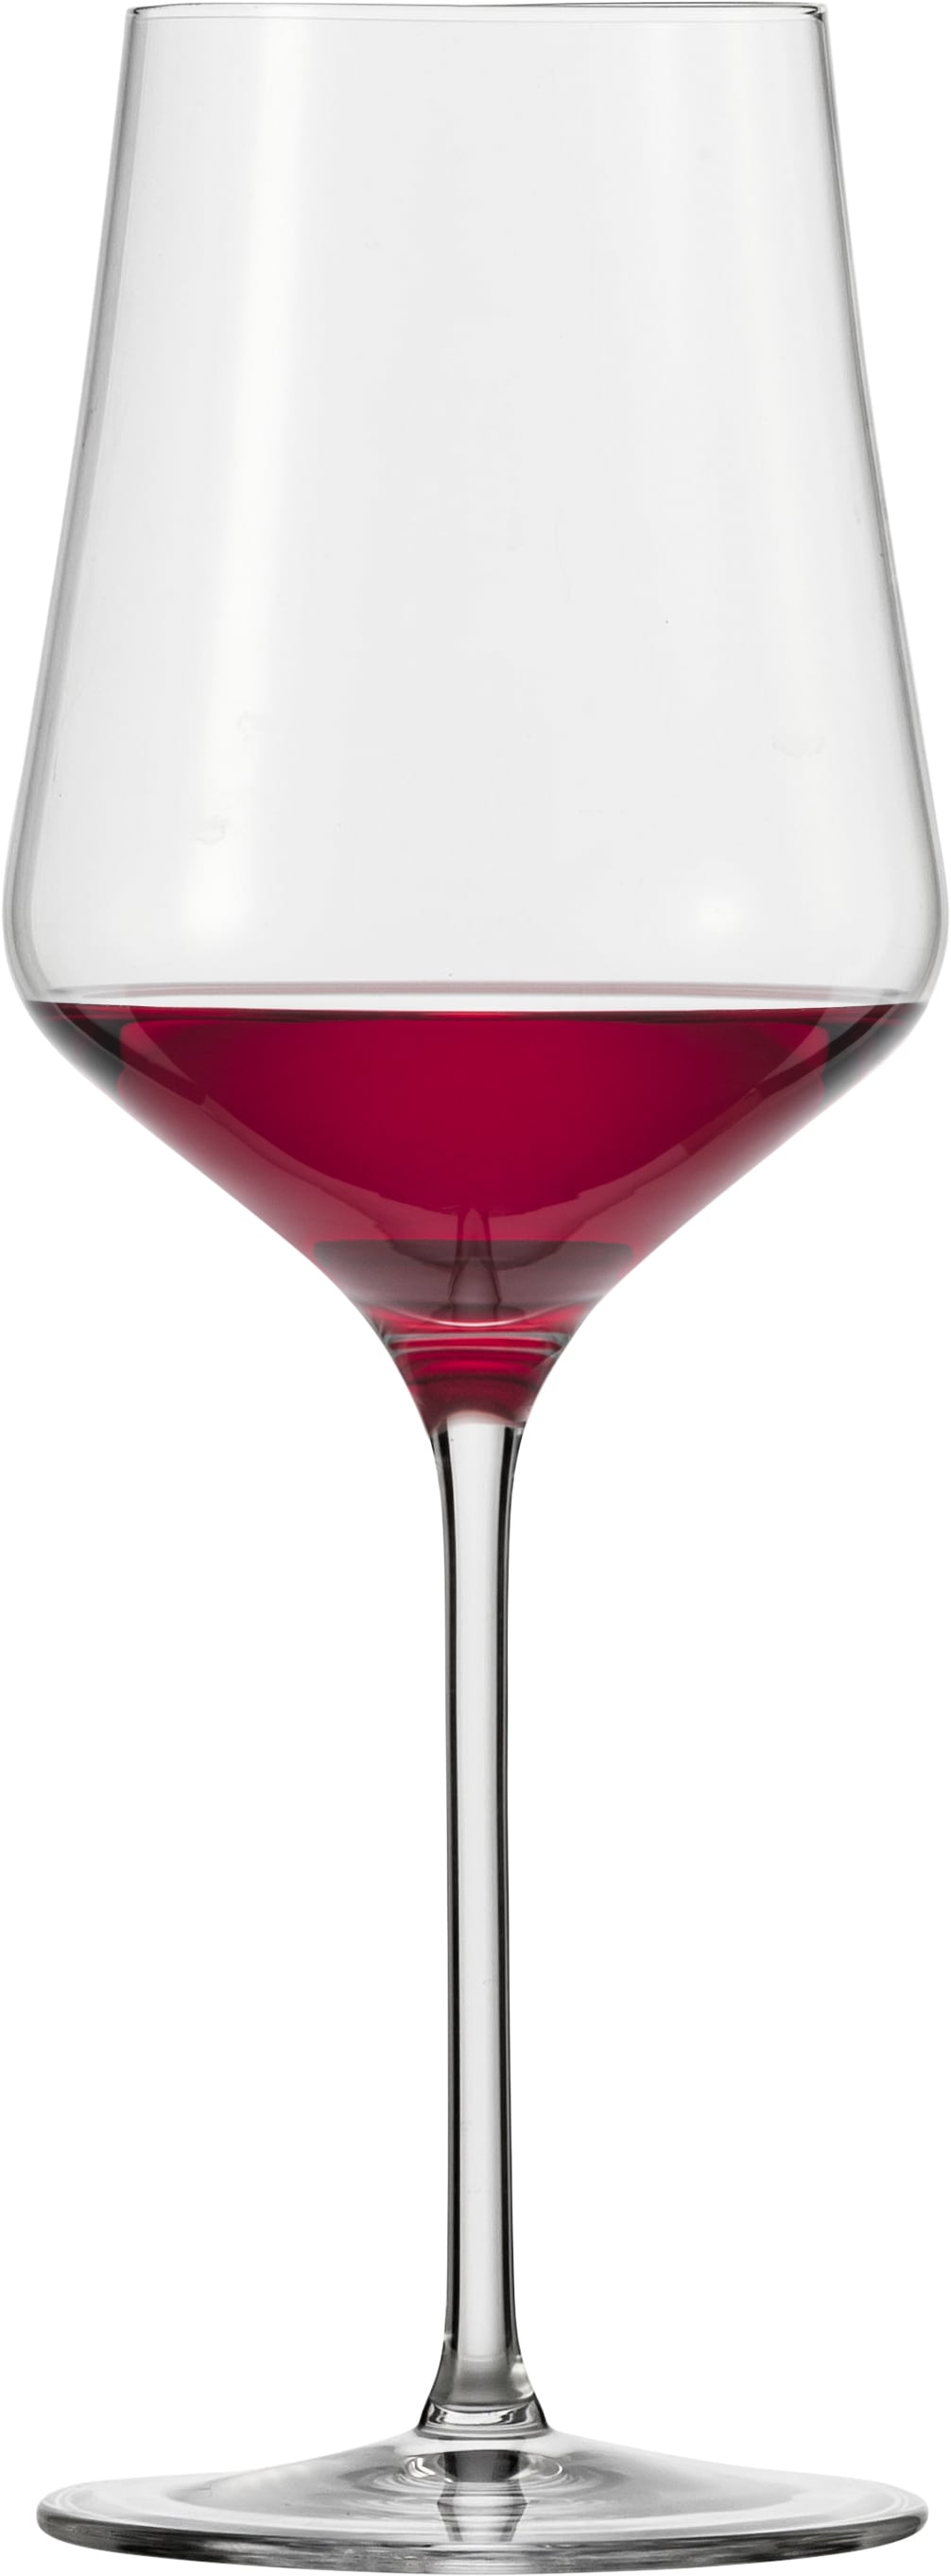 Eisch Rotweinglas »Sky SensisPlus«, (Set, 4 tlg.), bleifrei, 490 ml, 4-teilig